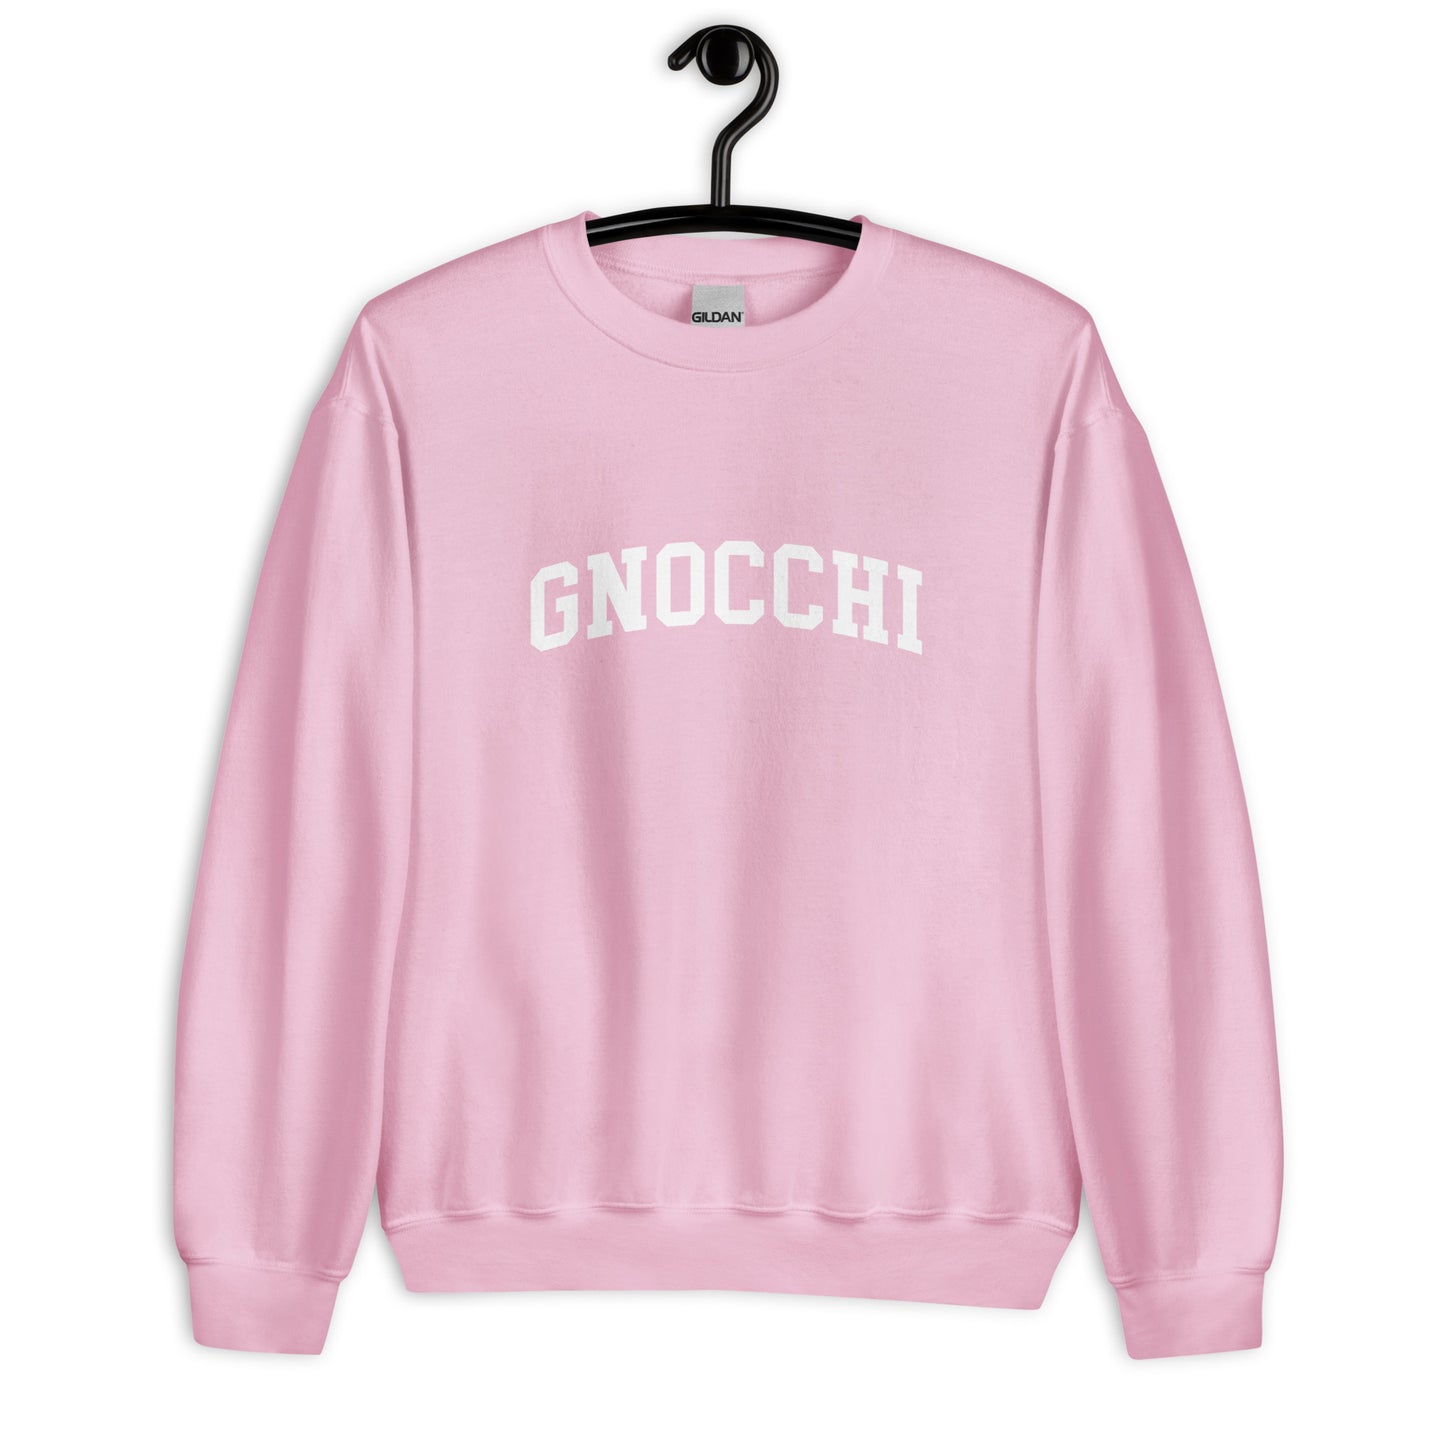 Gnocchi Sweatshirt - Arched Font